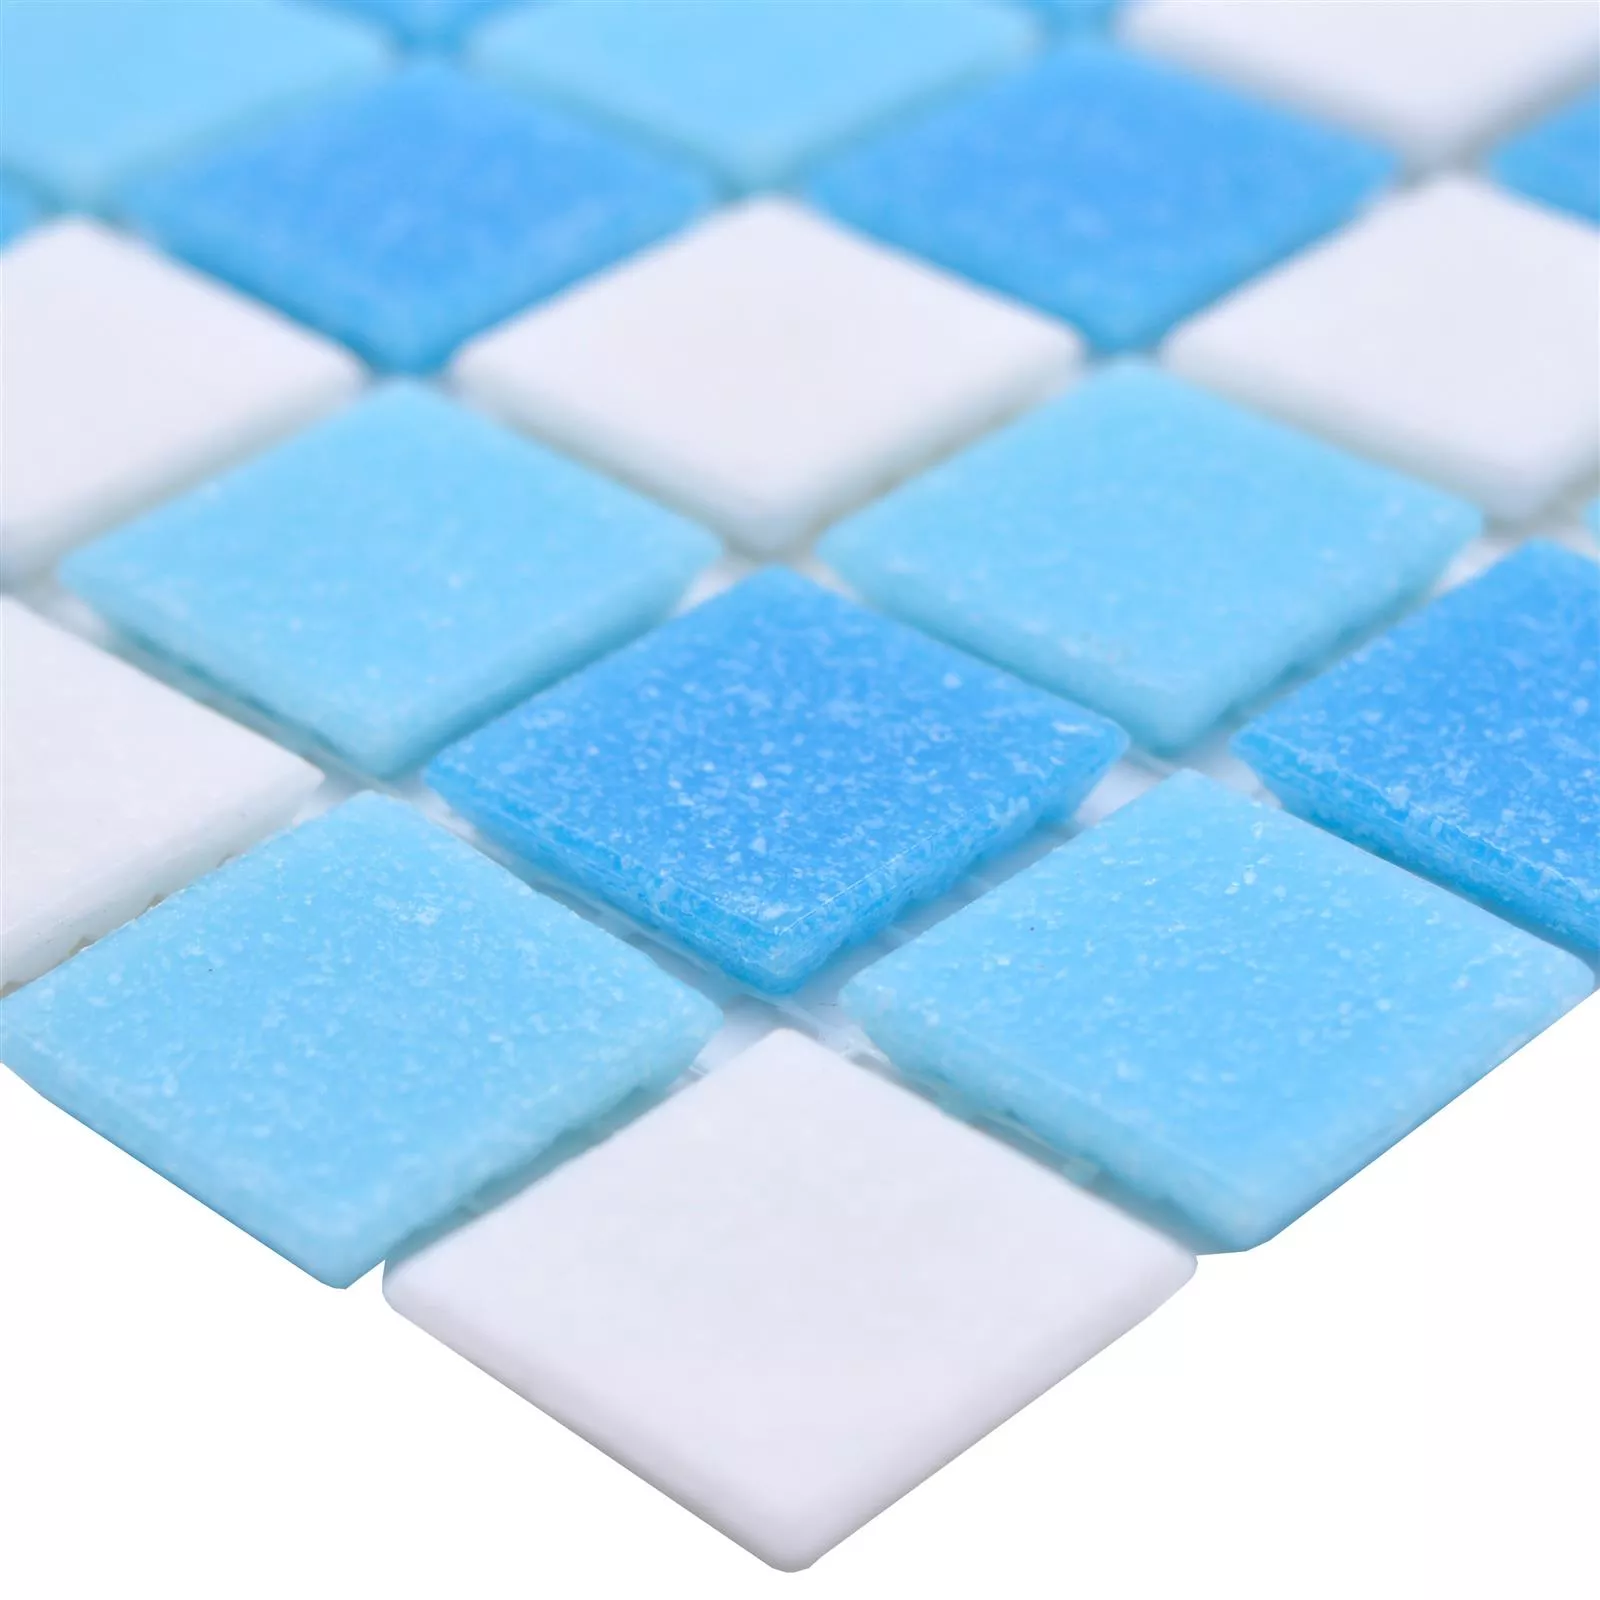 Sample Schwimmbad Pool Mosaik North Sea Weiß Blau Mix